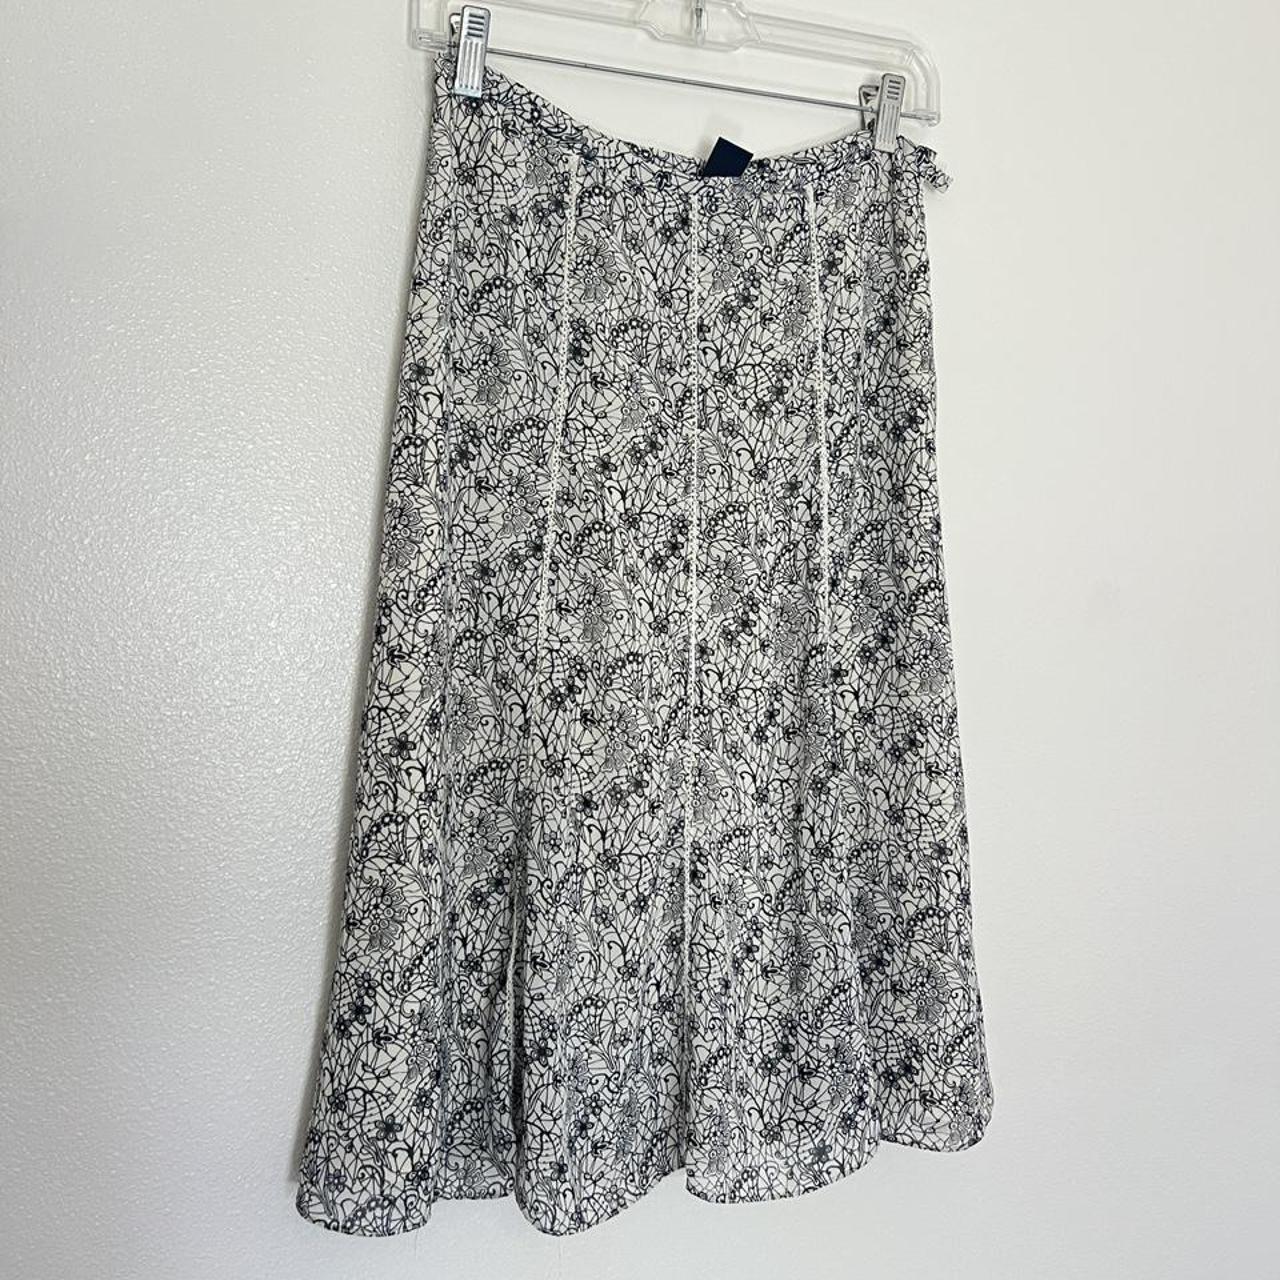 Vintage Jones Wear Midi Skirt Black & White floral... - Depop